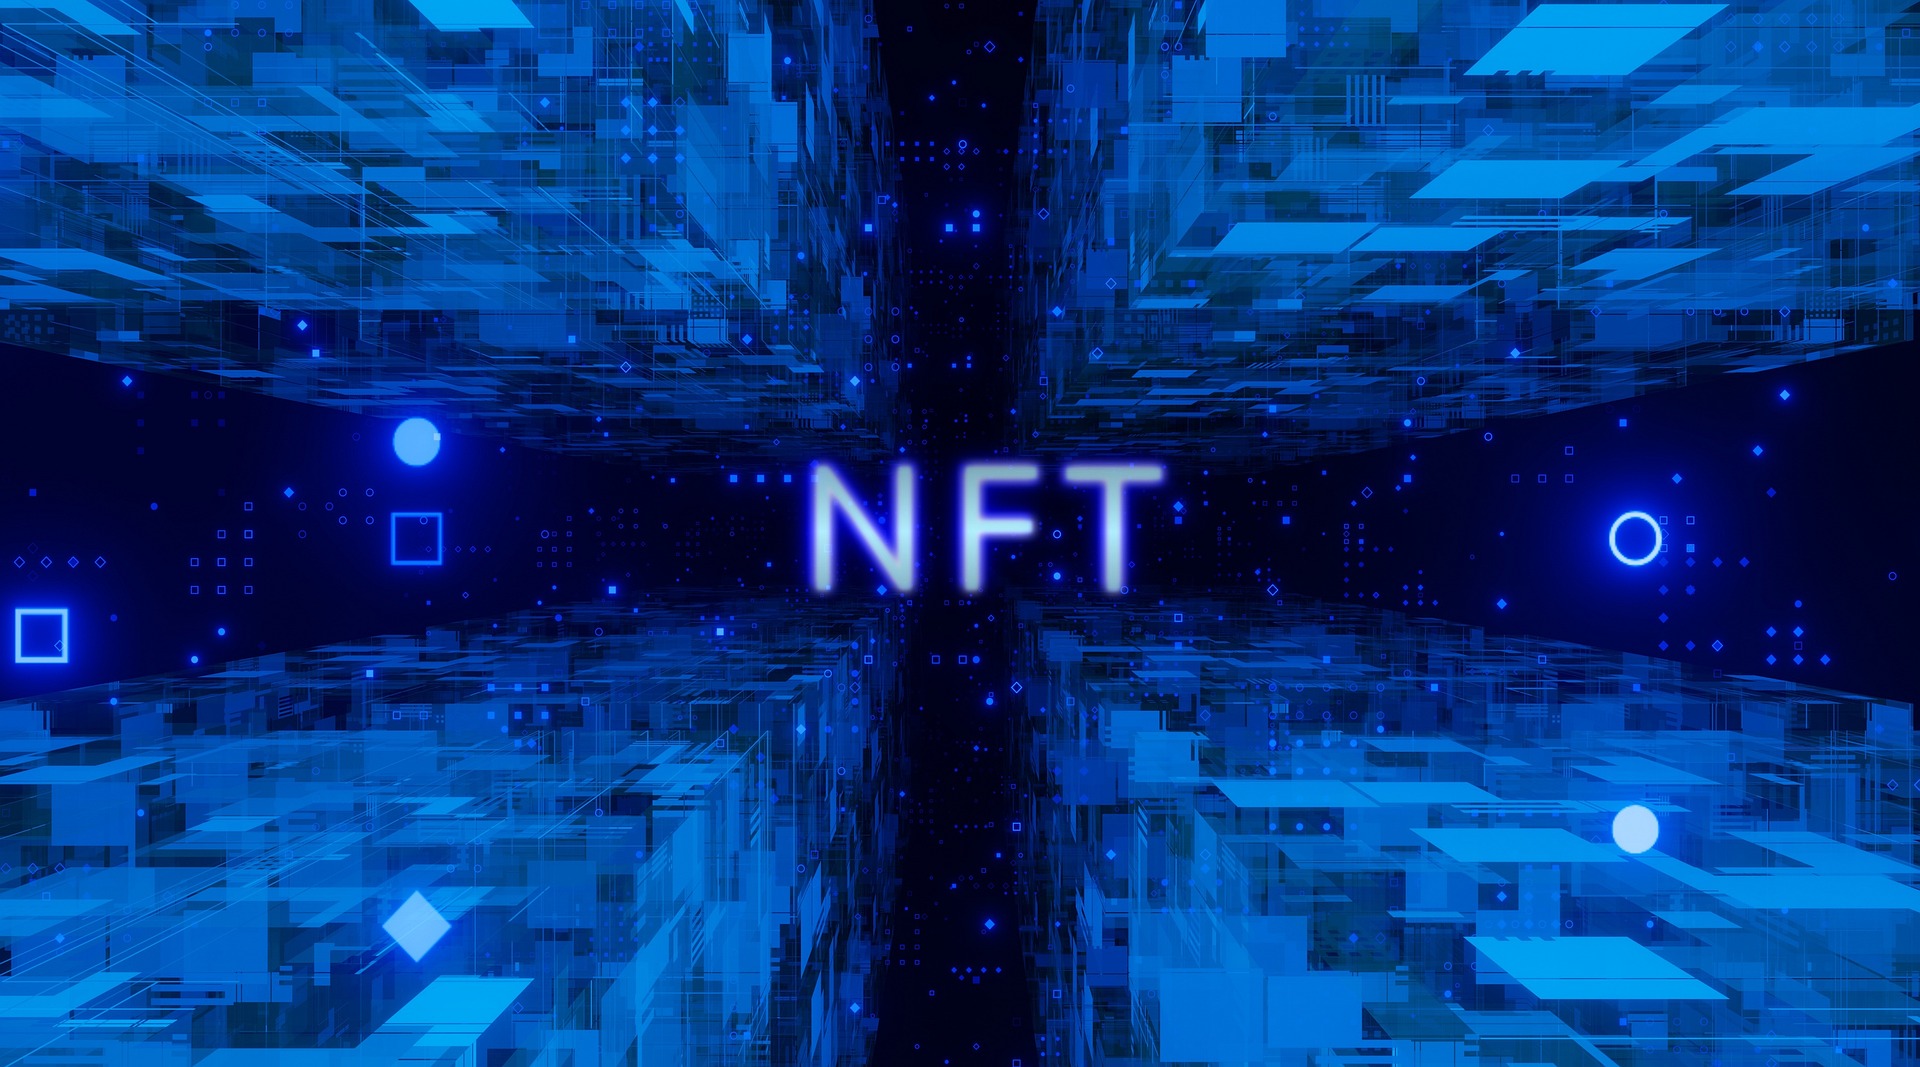 Essence of NFT